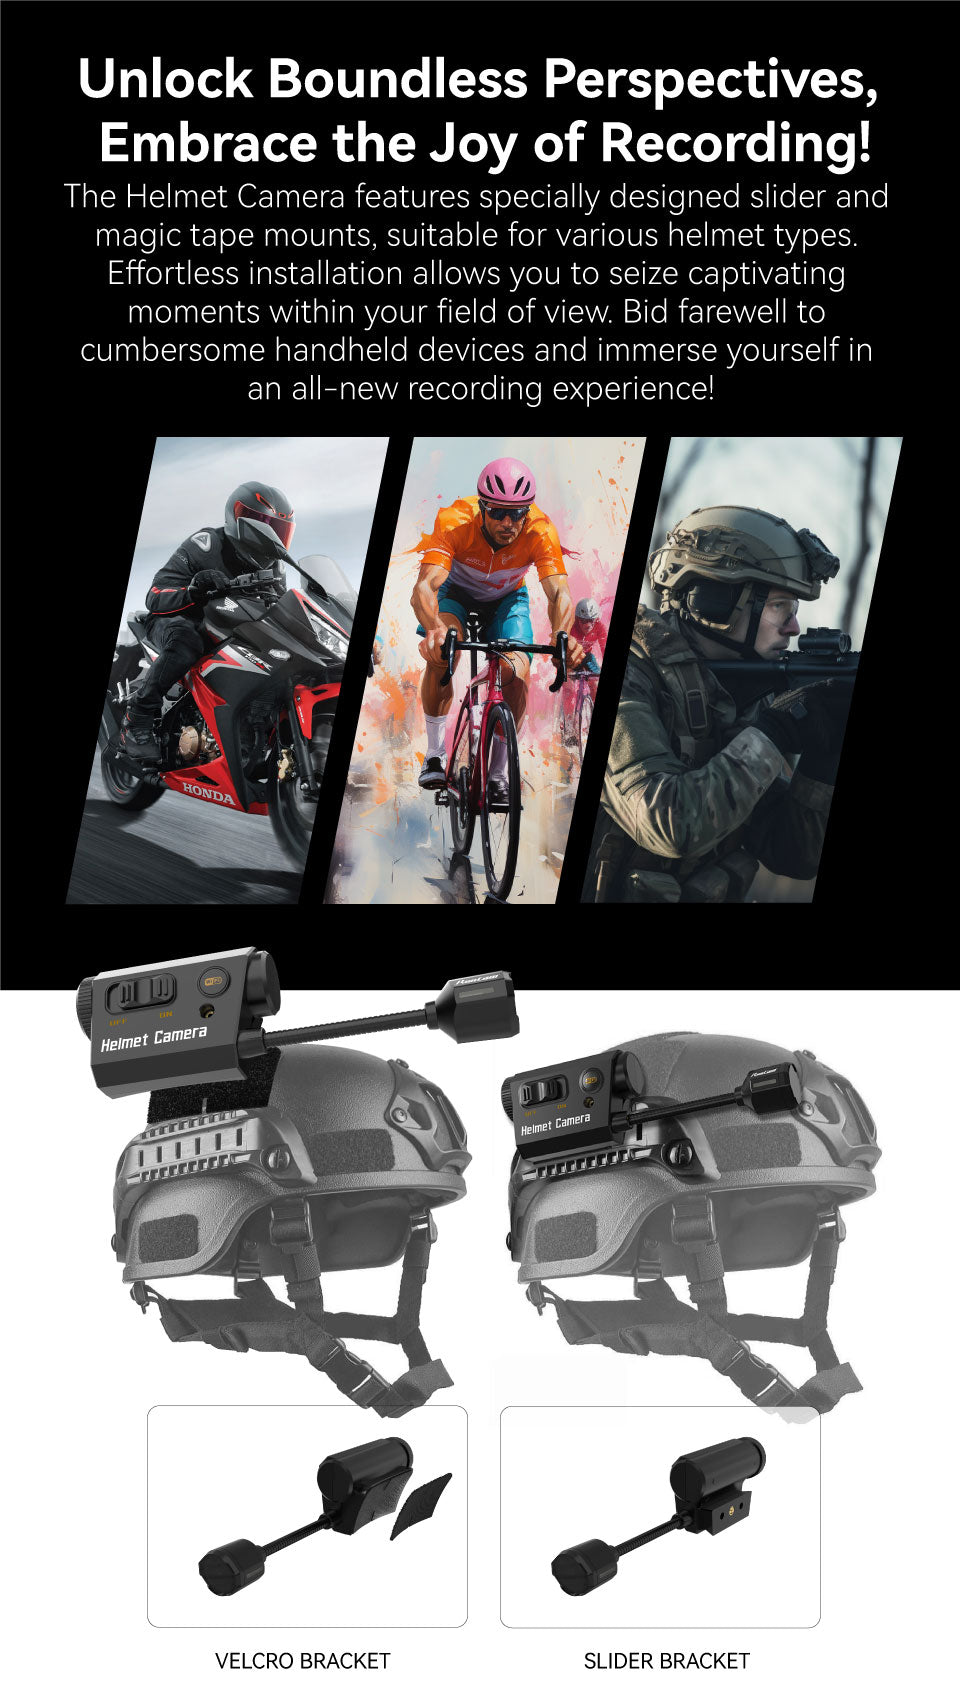 RunCam Helmet Camera, Helmet Camera features specially designed slider and magic tape mounts, suitable for various helmet types